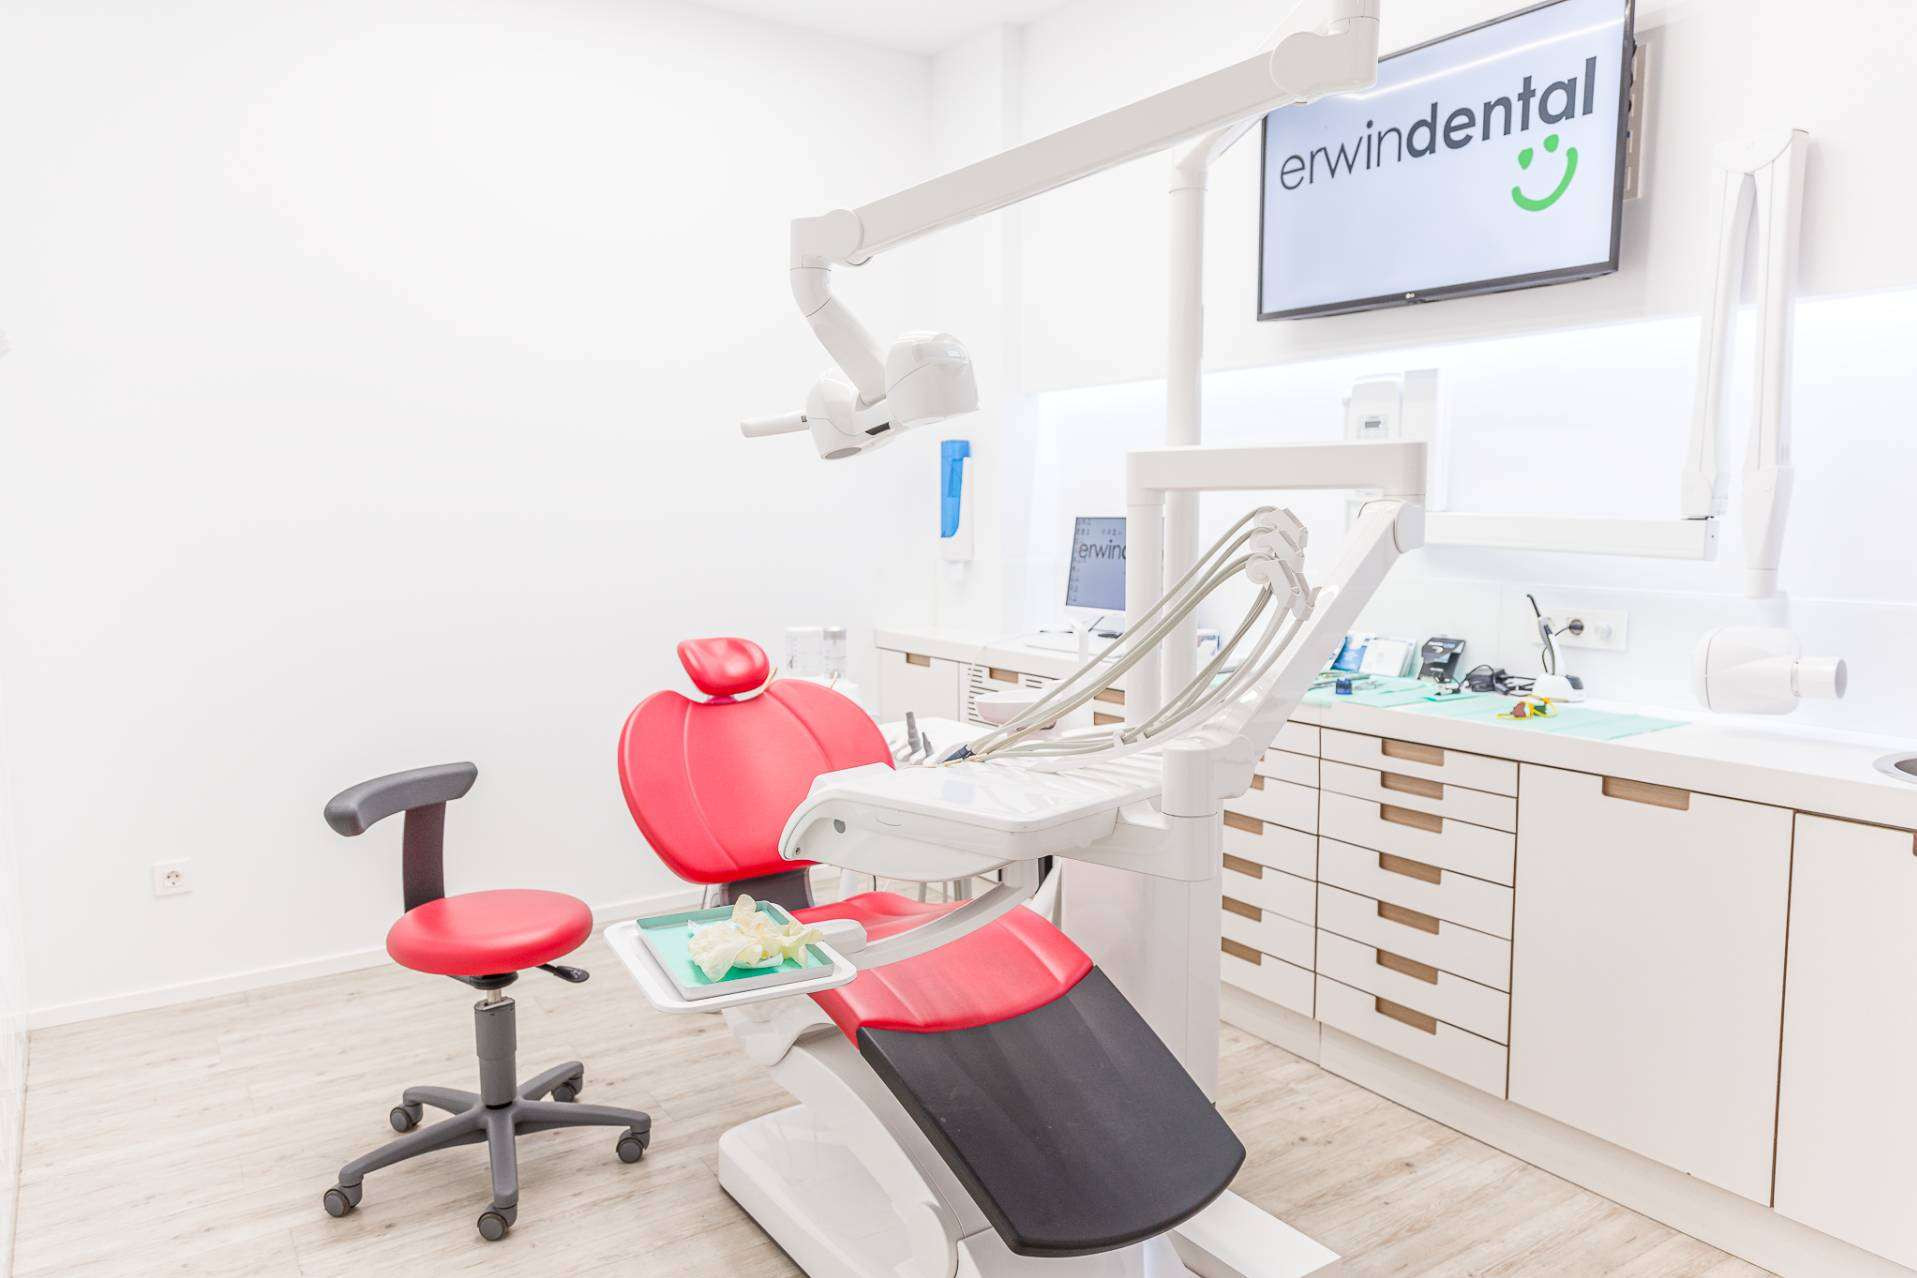  Entrevista a Goretti Ferreira, higienista dental de la Clínica dental Erwindental 